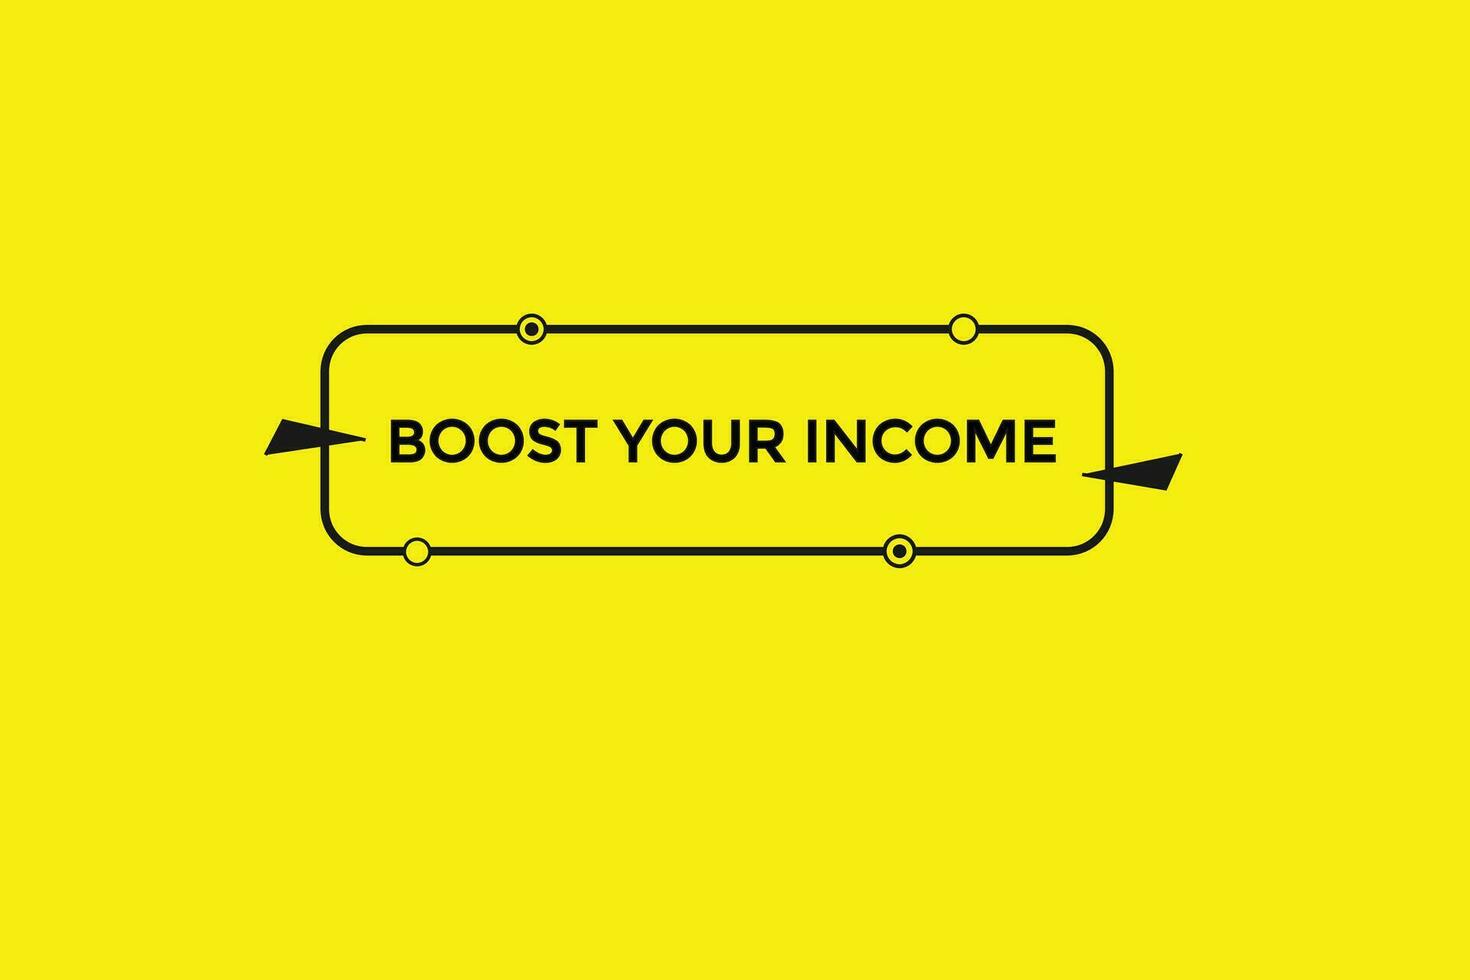 nuevo aumentar tu ingresos moderno, sitio web, hacer clic botón, nivel, firmar, discurso, burbuja bandera, vector